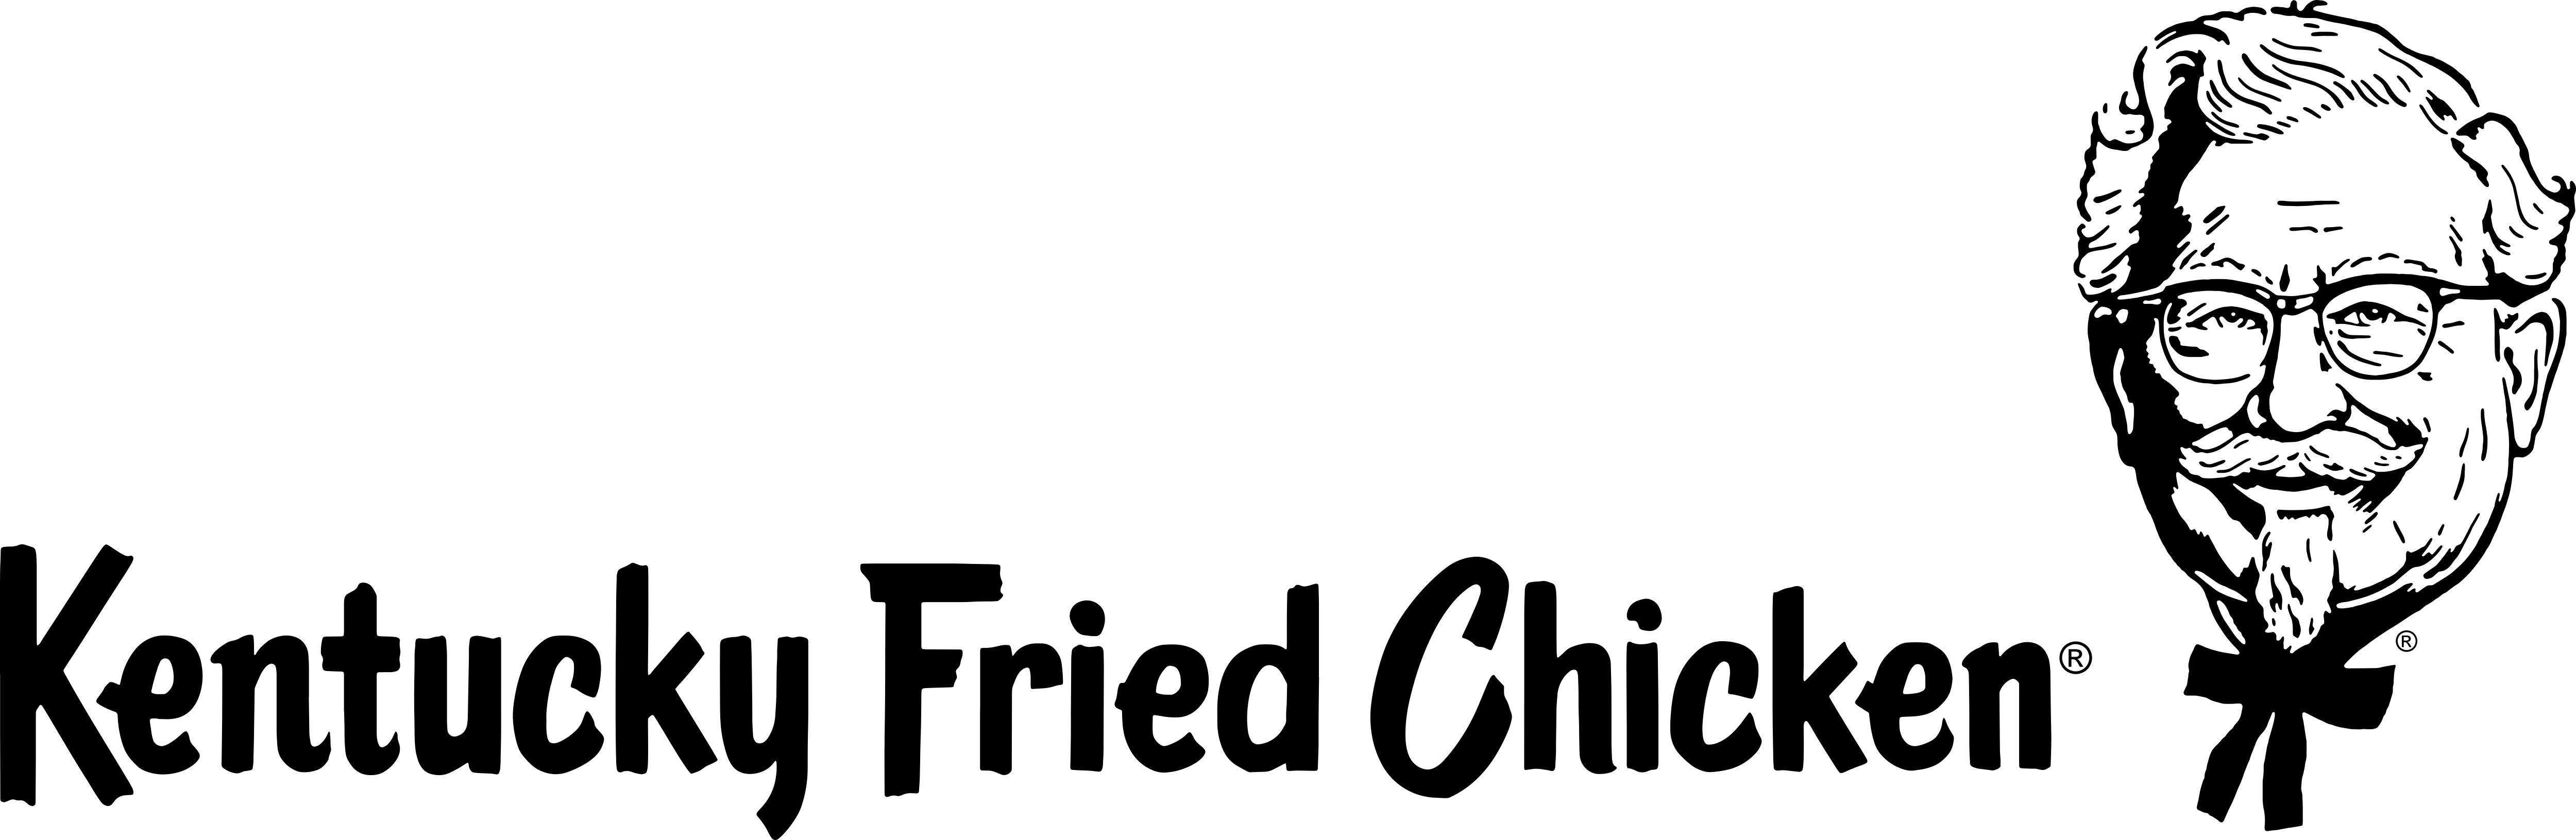 kfc logo vector